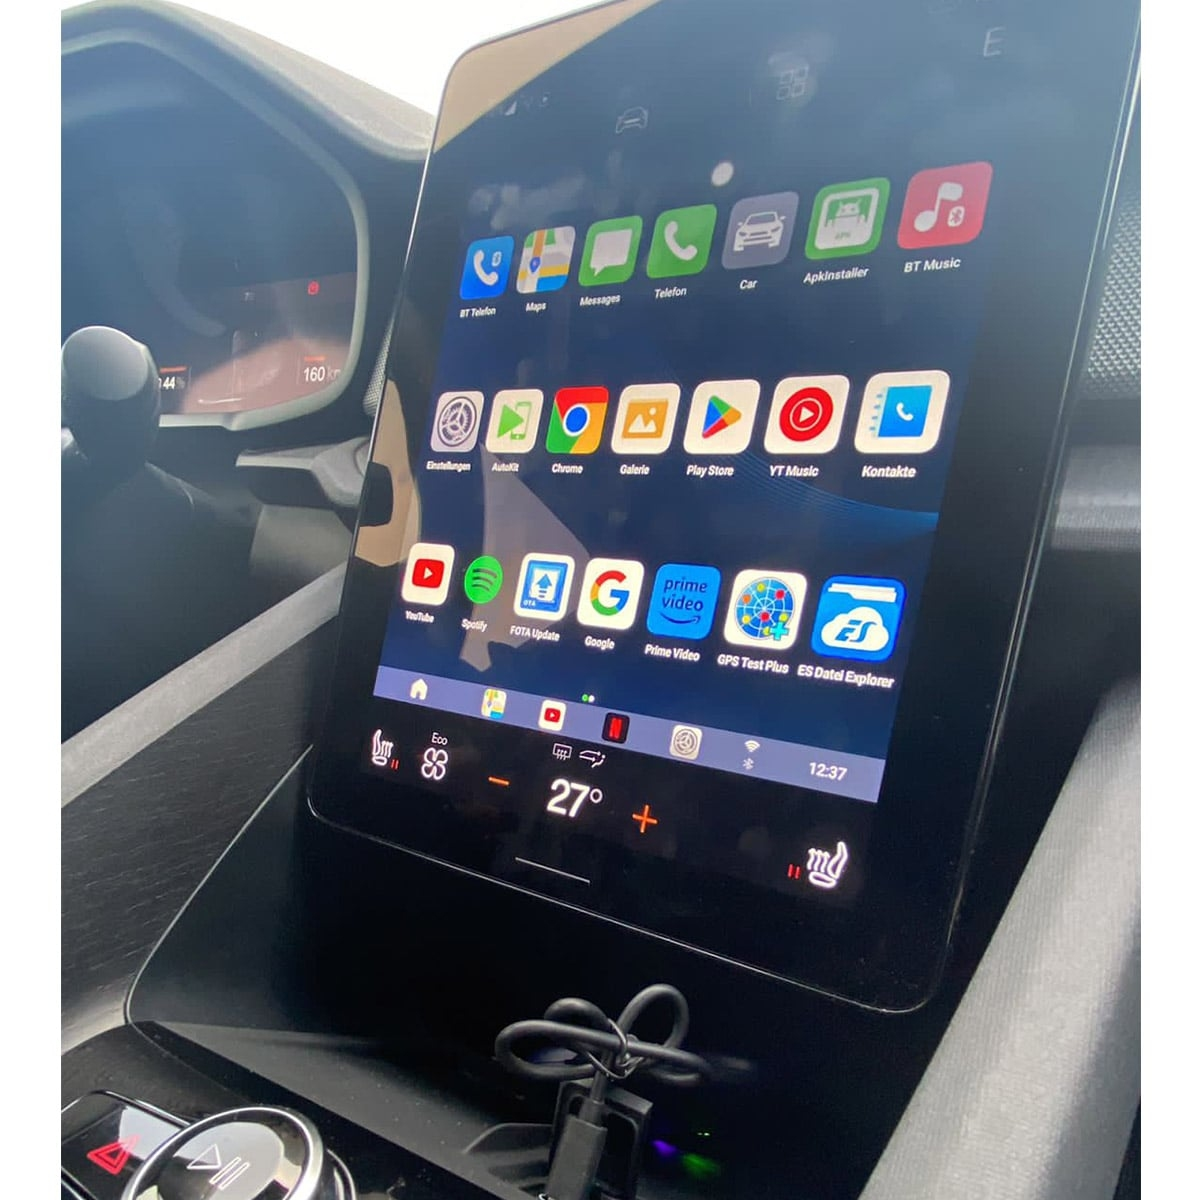 GIGABLUE CarPlay AI Box Android 13 TV Carplay-Adapter